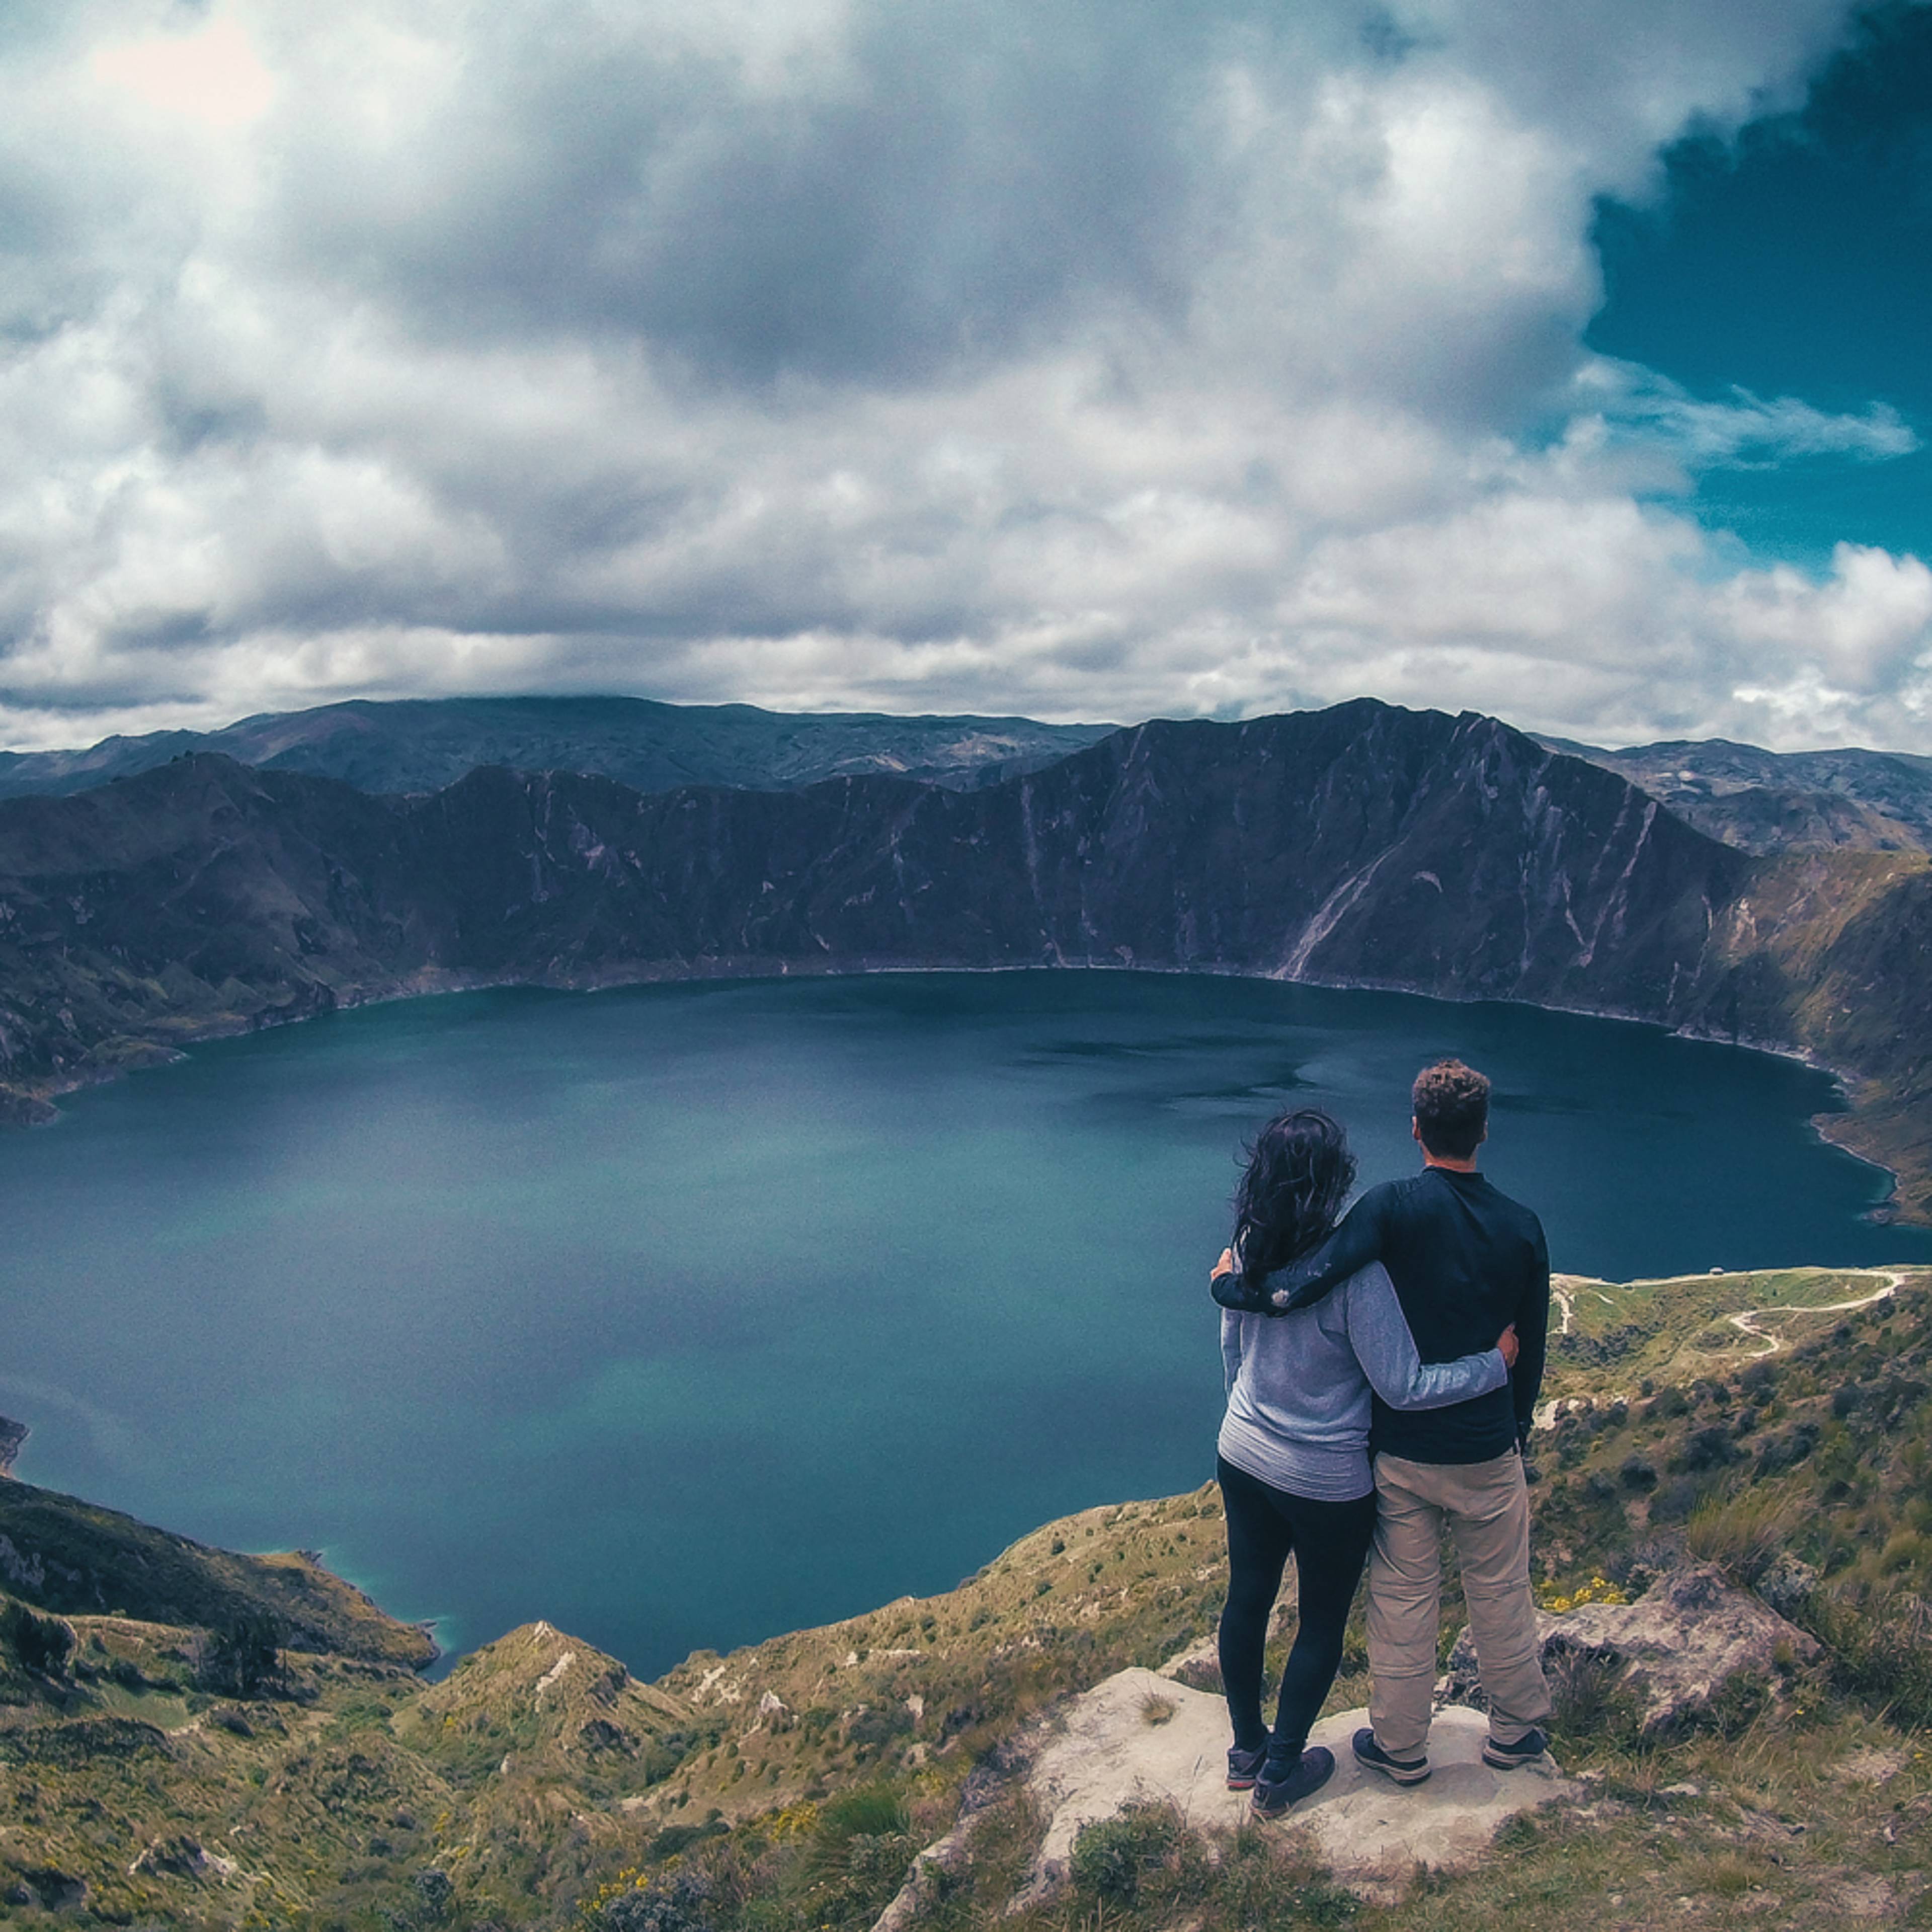 Design your romantic getaway with a local expert in Ecuador